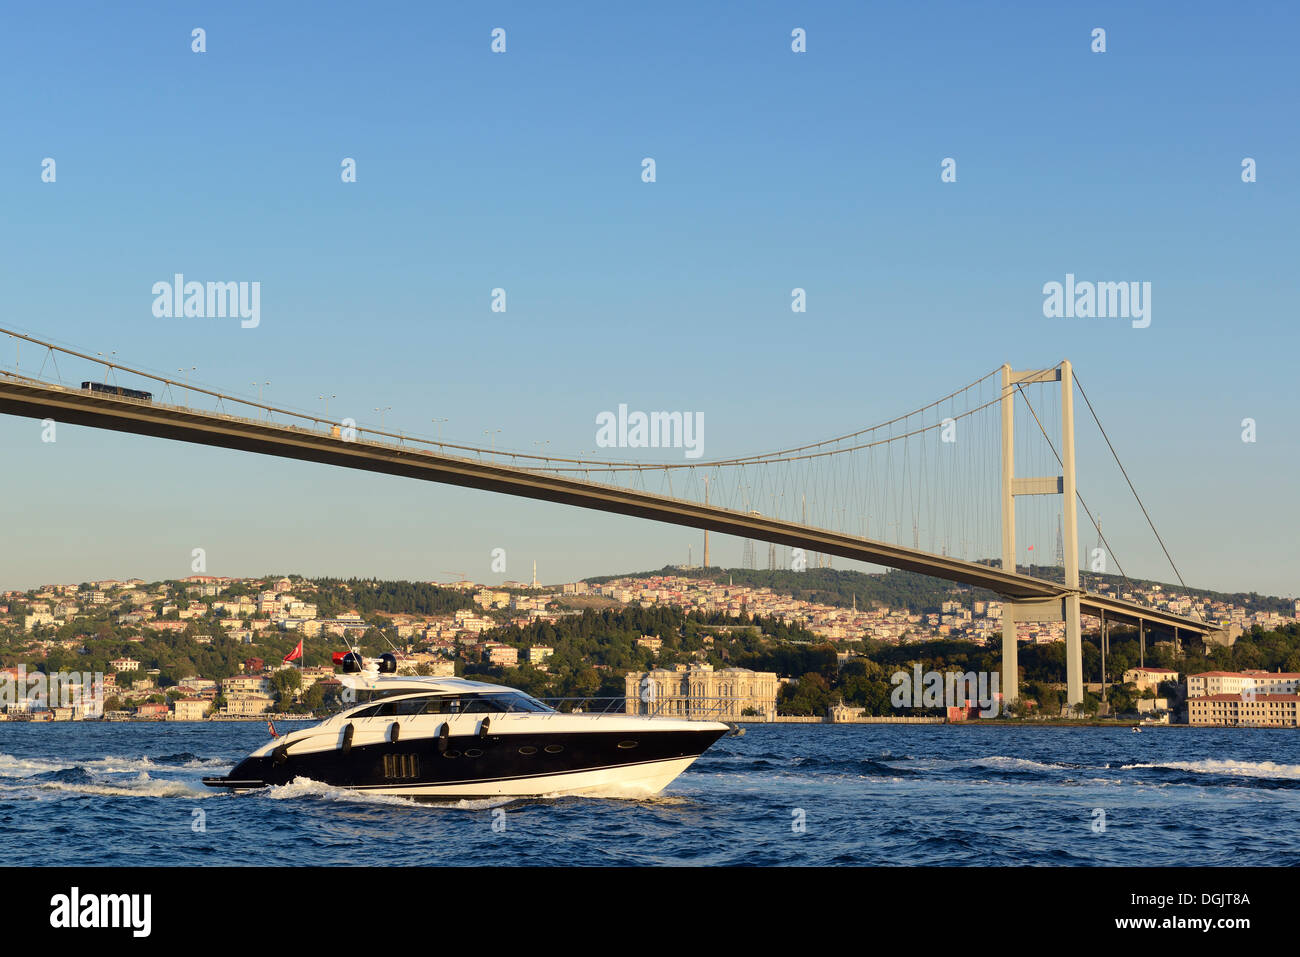 Motor yacht on the Bosphorus, Bosphorus Bridge and Beylerbeyi Palace on the Asian shore, seen from Ortakoey, Istanbul Stock Photo